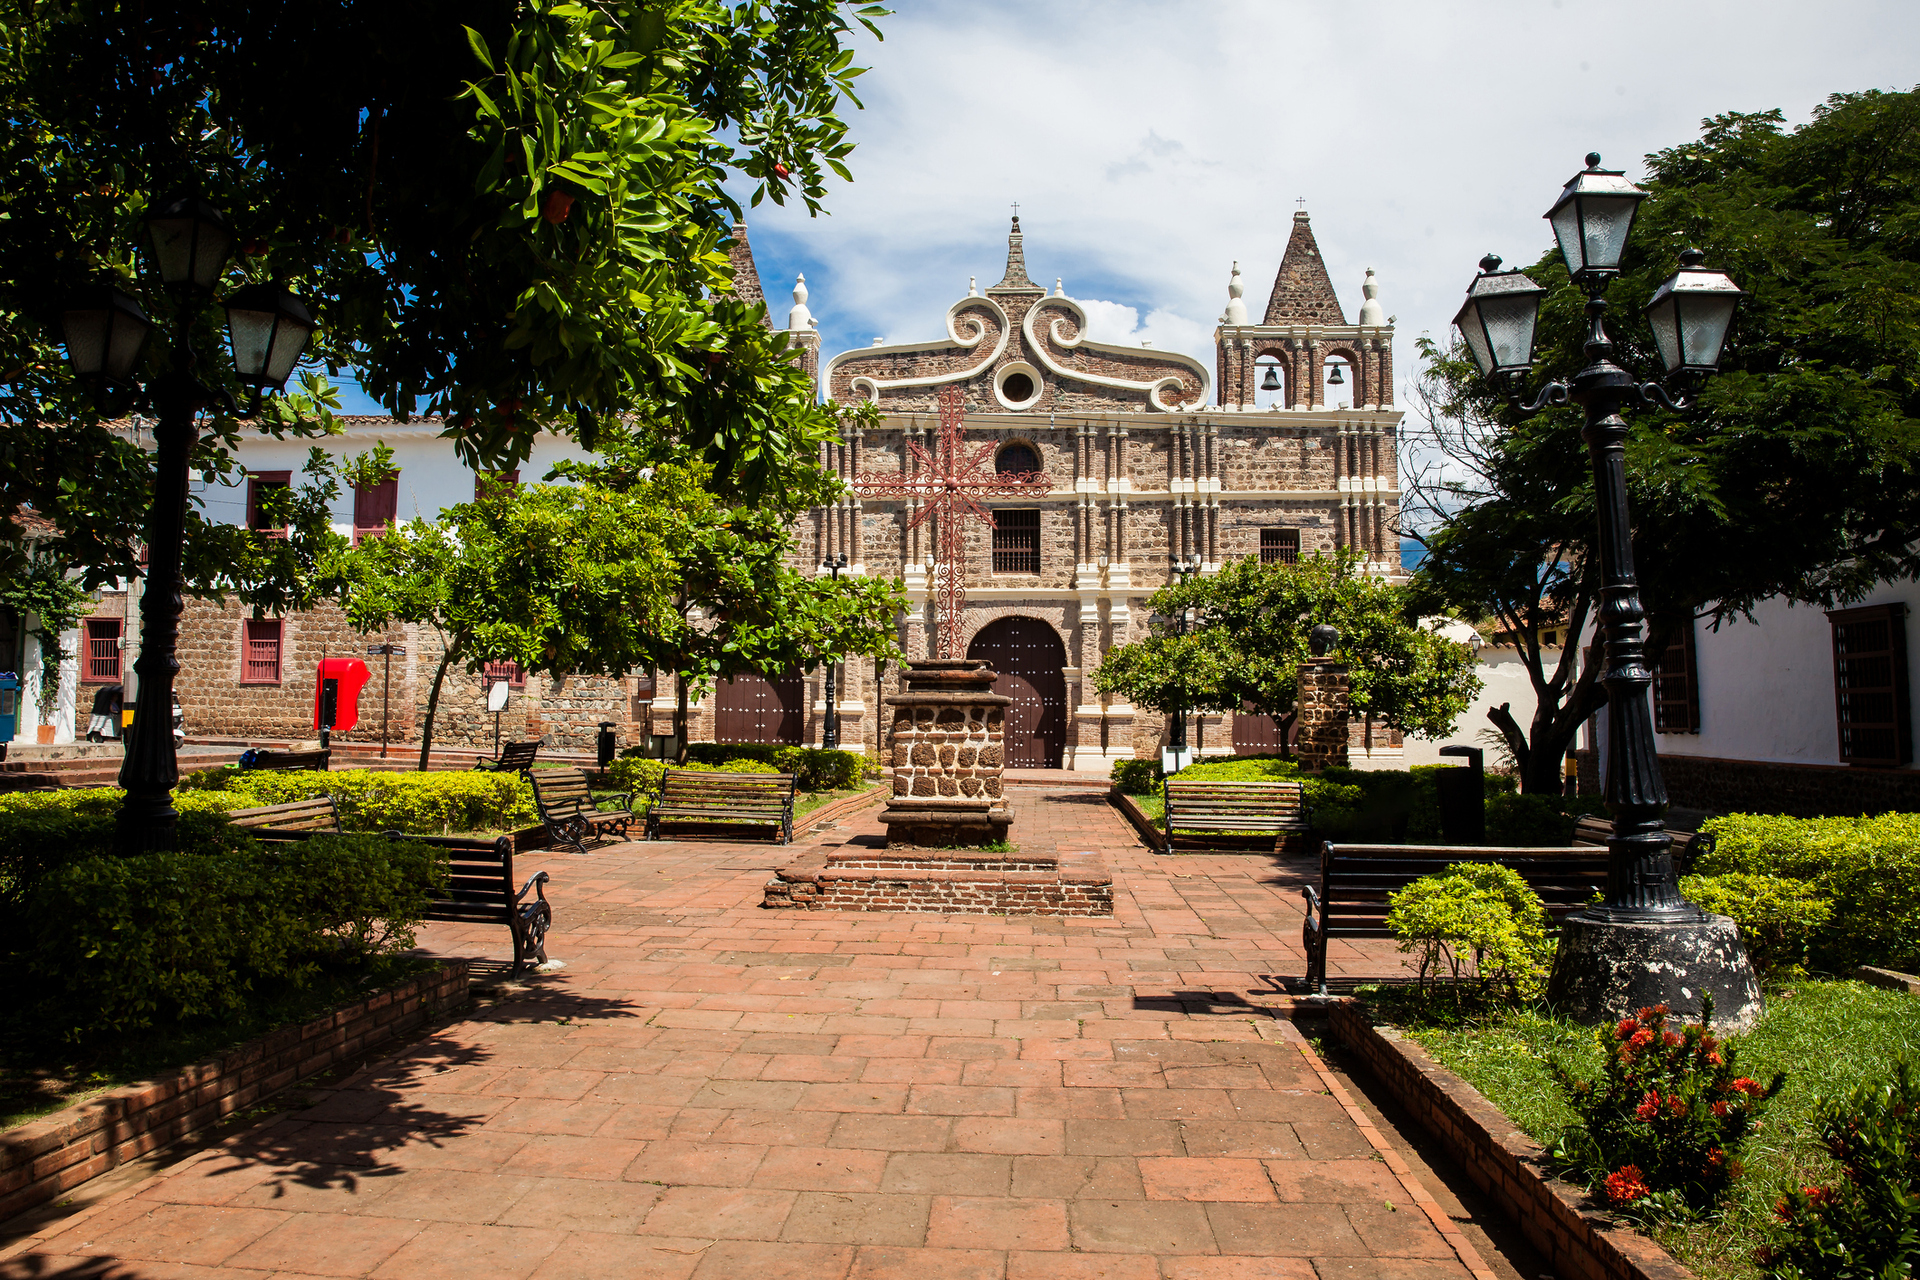 Santa Fe de Antioquia Heritage Tour